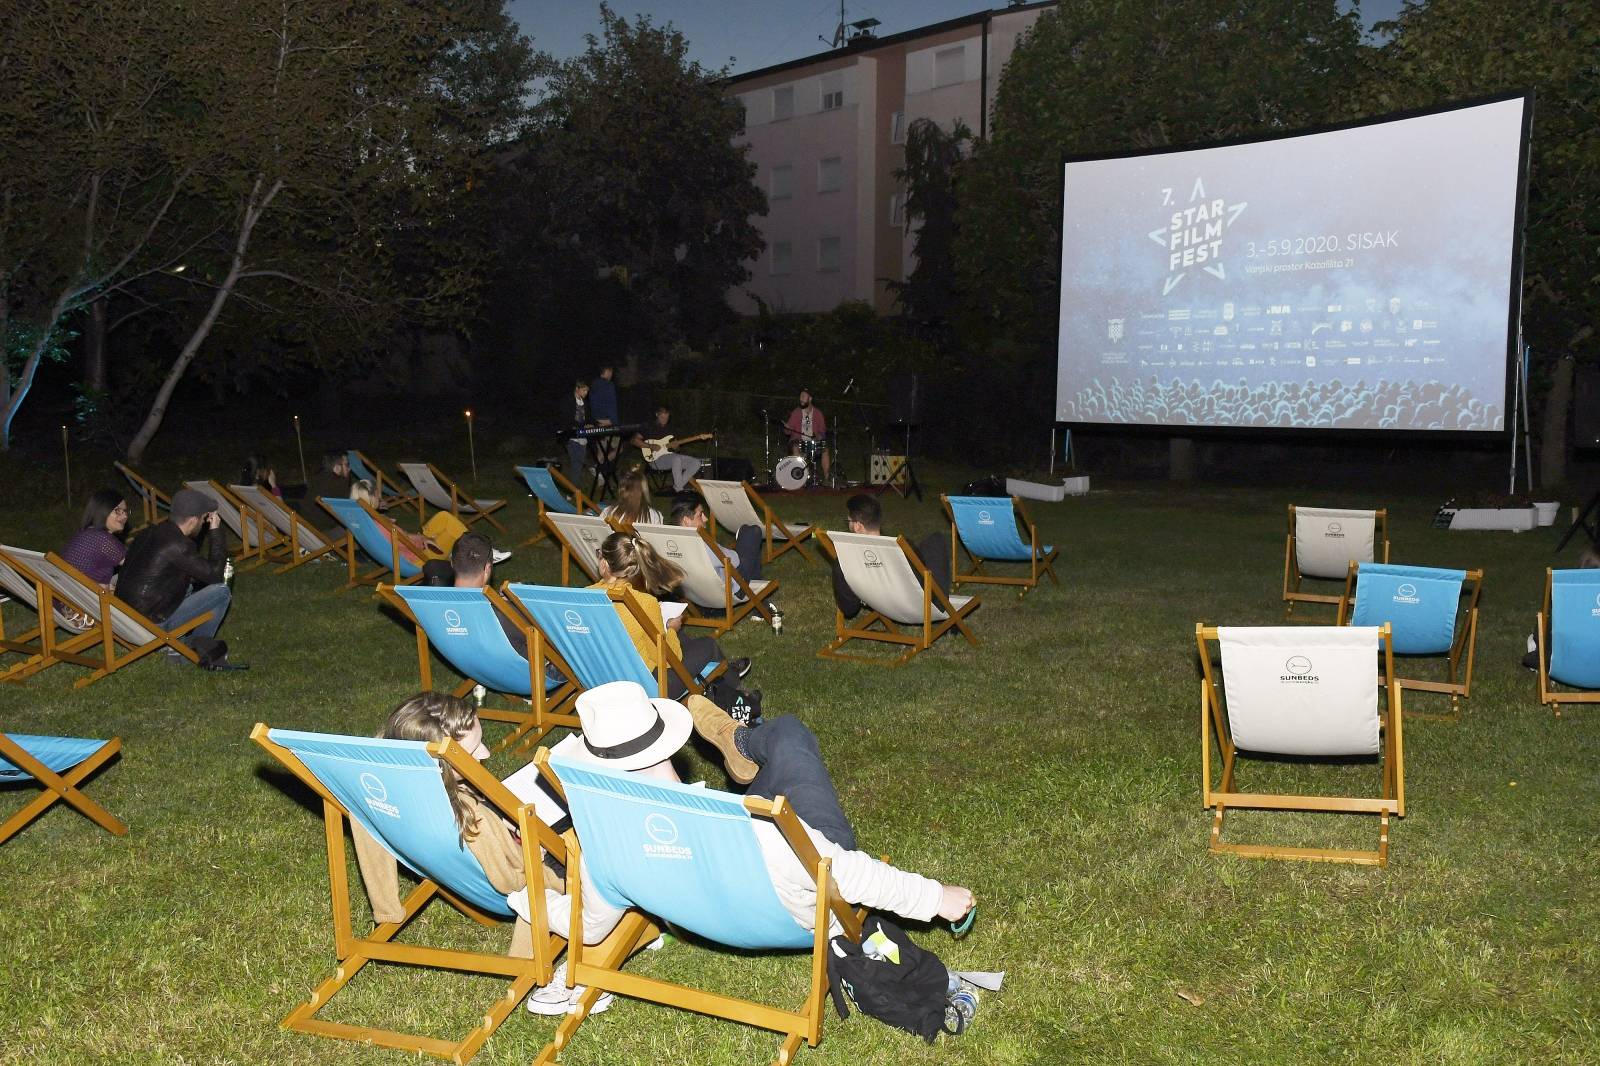 Sisak: Započeo je 7. Star Film Fest u organizaciji Kino kluba Sisak